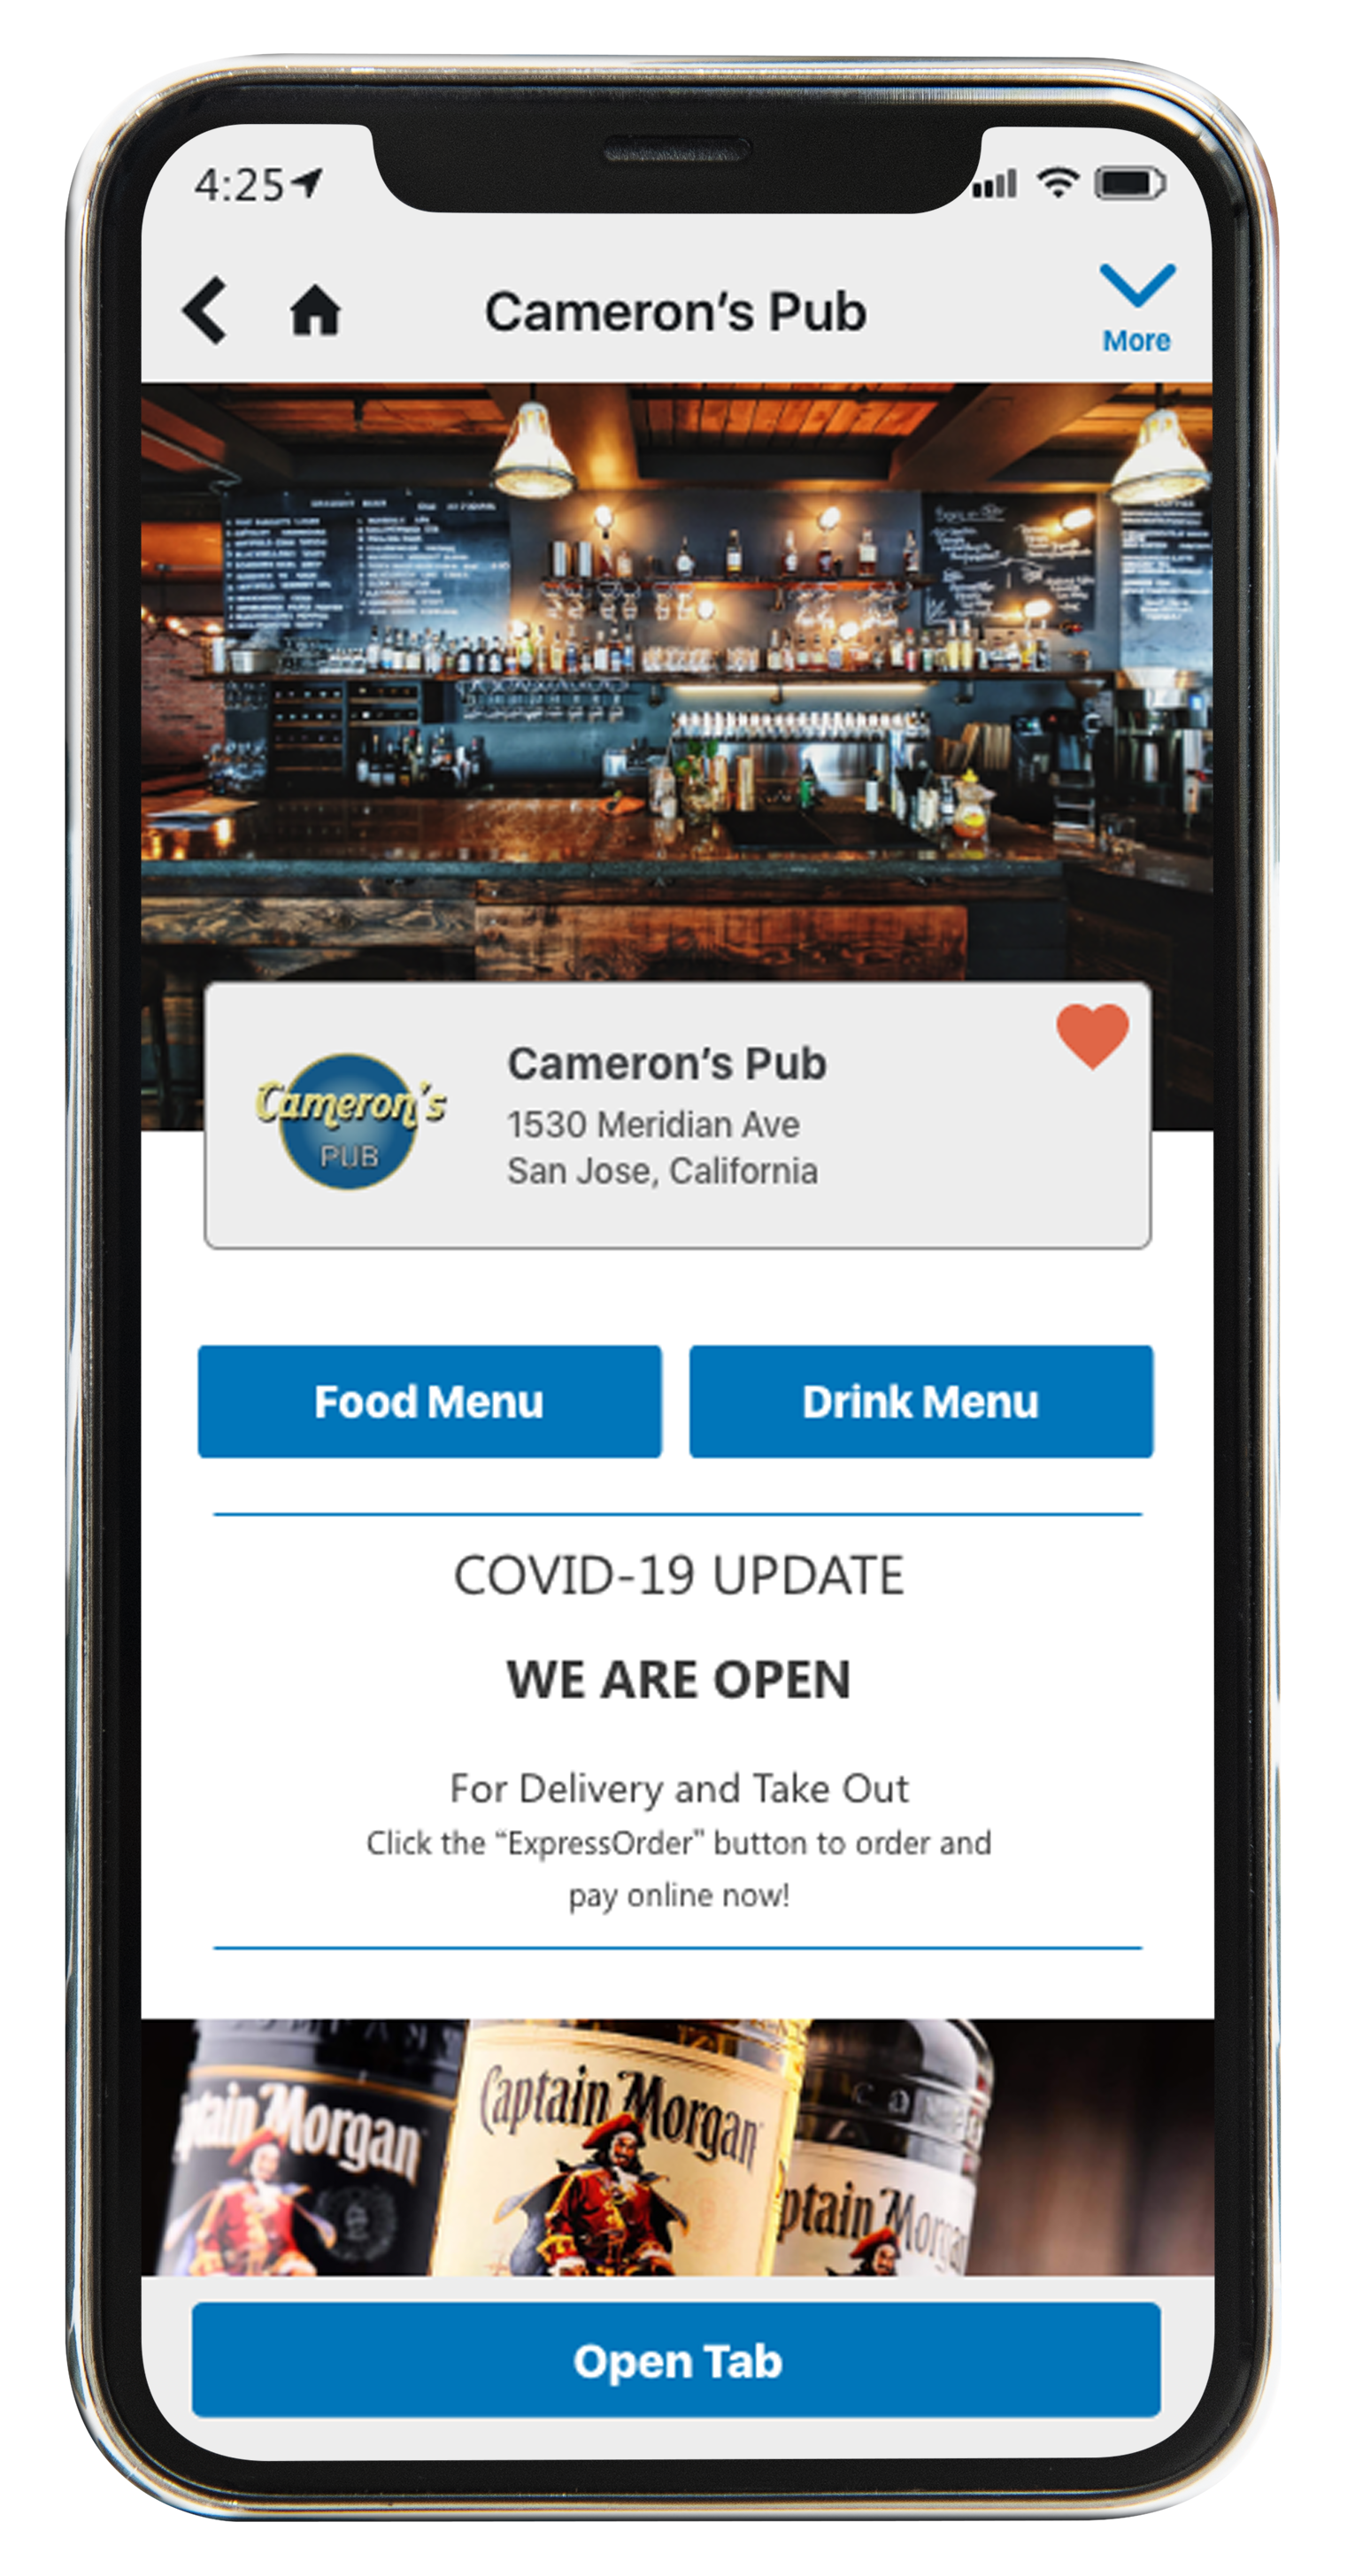 Cameron's Pub